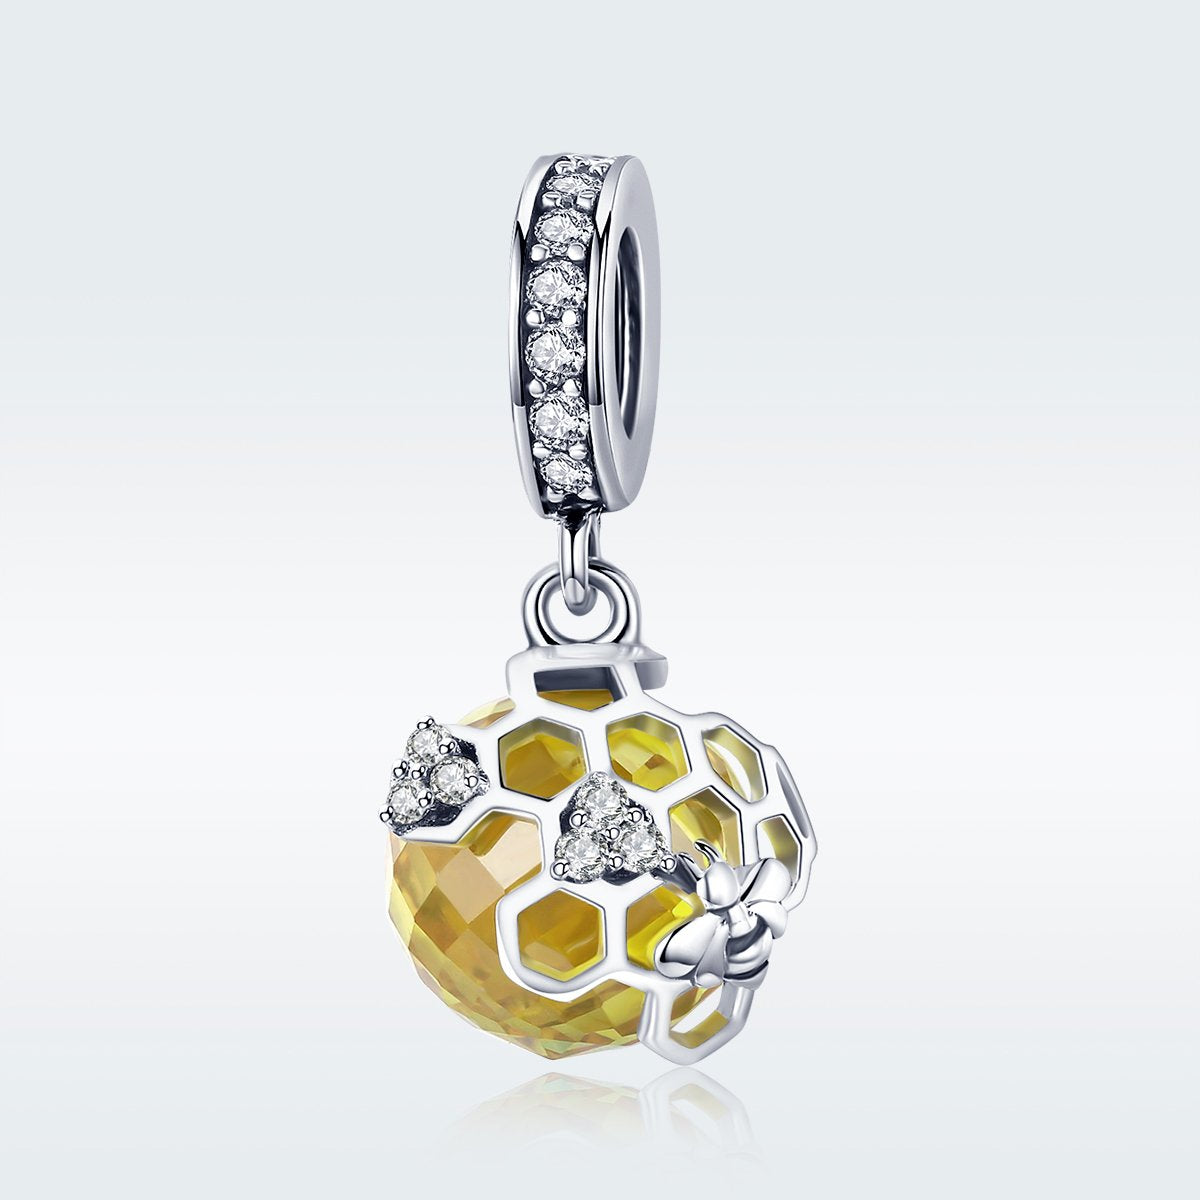 Sterling 925 silver charm the nest n honey pendant fits Pandora charm and European charm bracelet Xaxe.com